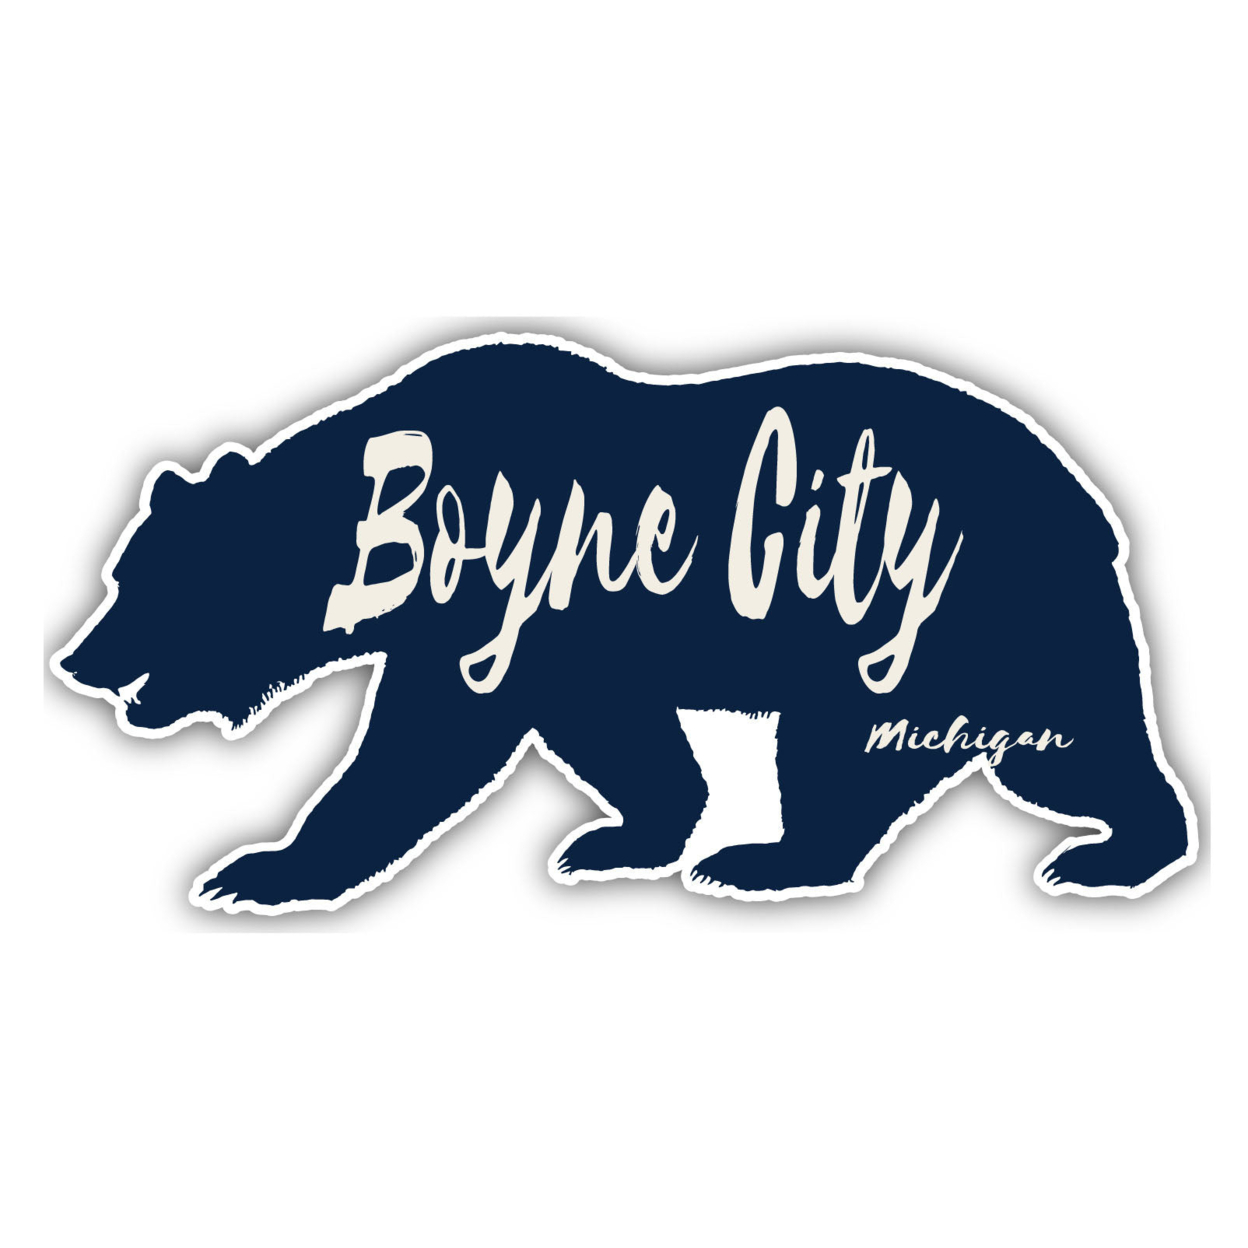 Boyne City Michigan Souvenir Decorative Stickers (Choose Theme And Size) - 4-Pack, 8-Inch, Adventures Awaits